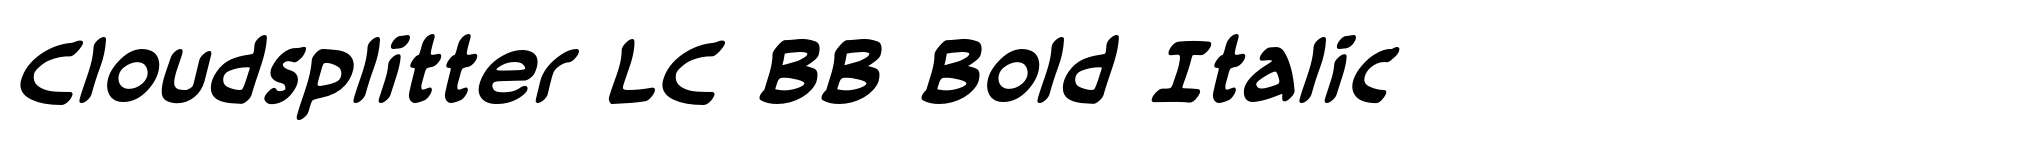 Cloudsplitter LC BB Bold Italic image